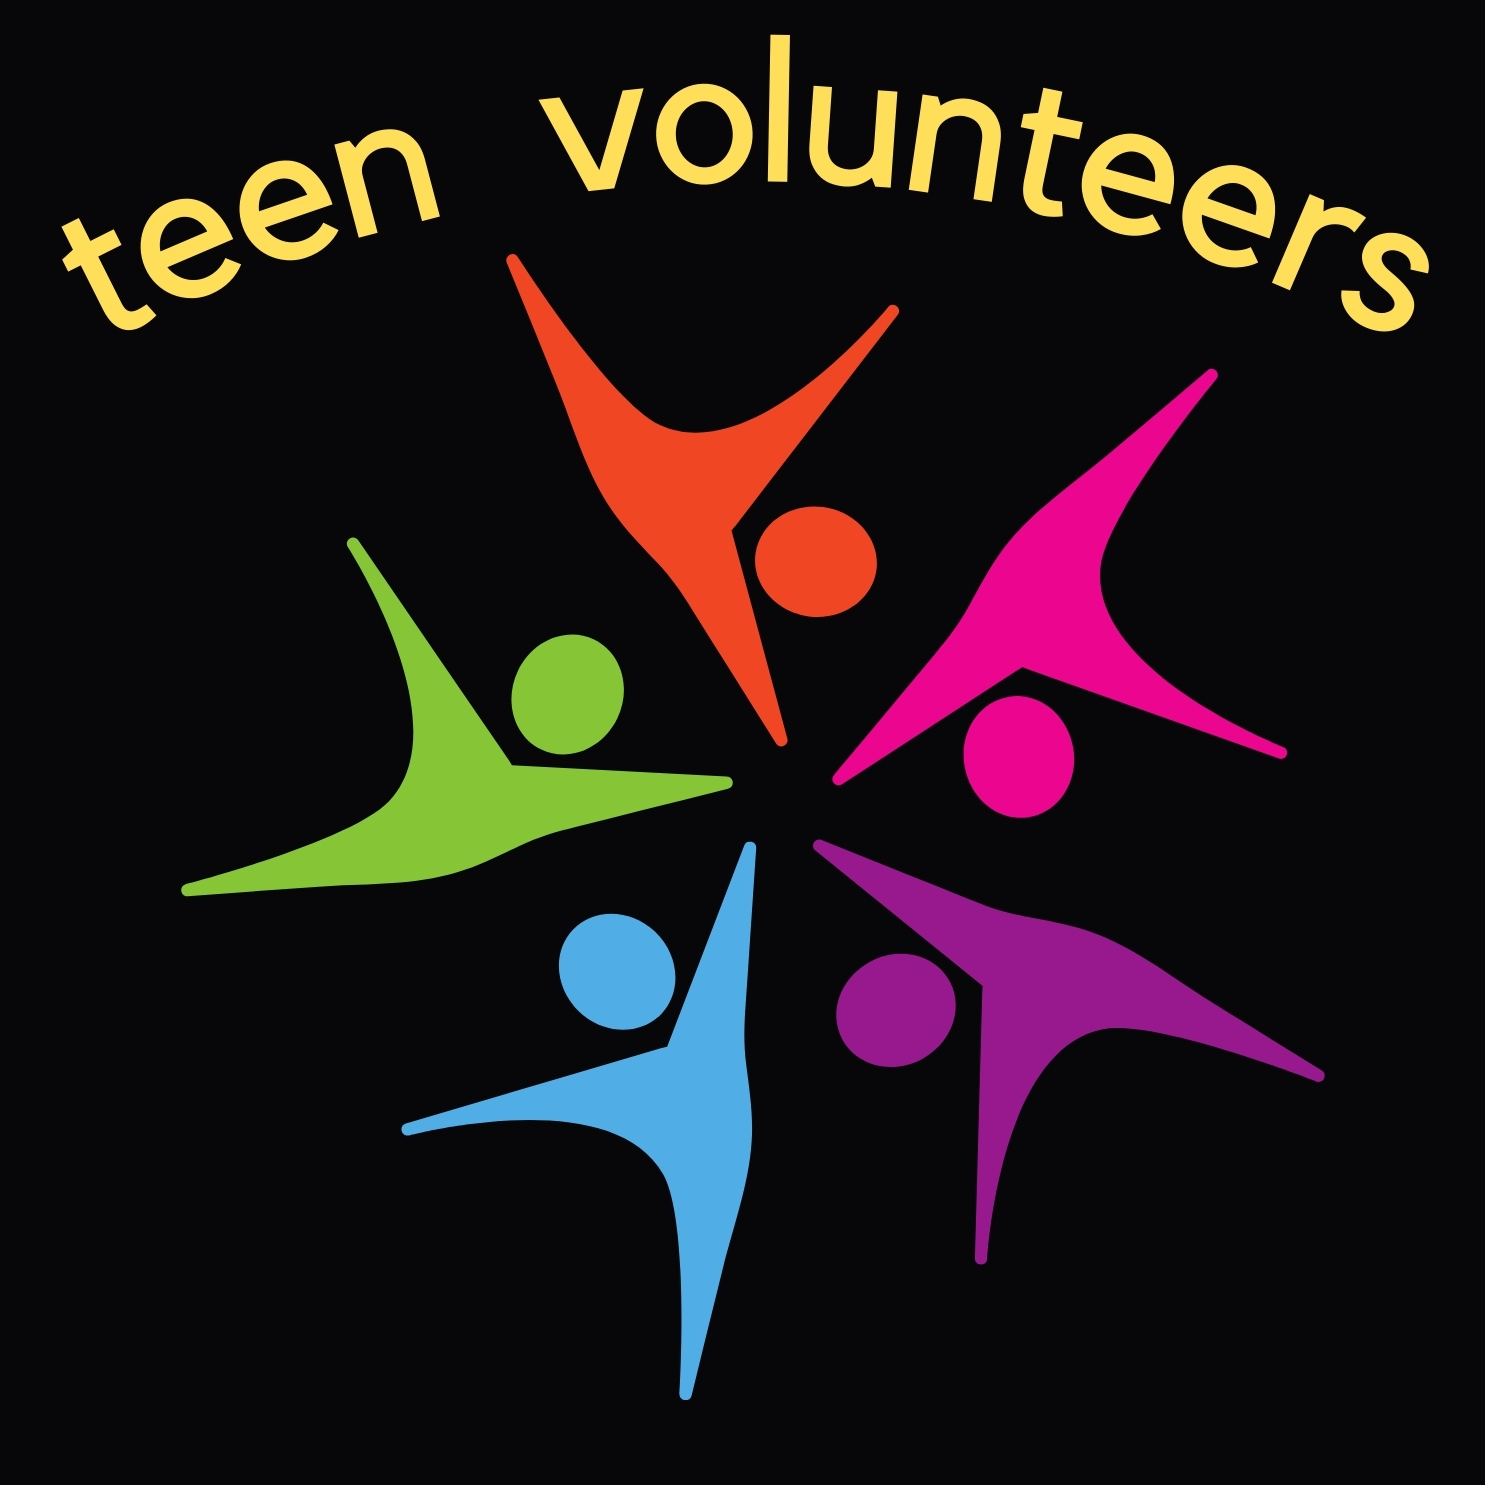 Teen Tuesday Volunteers